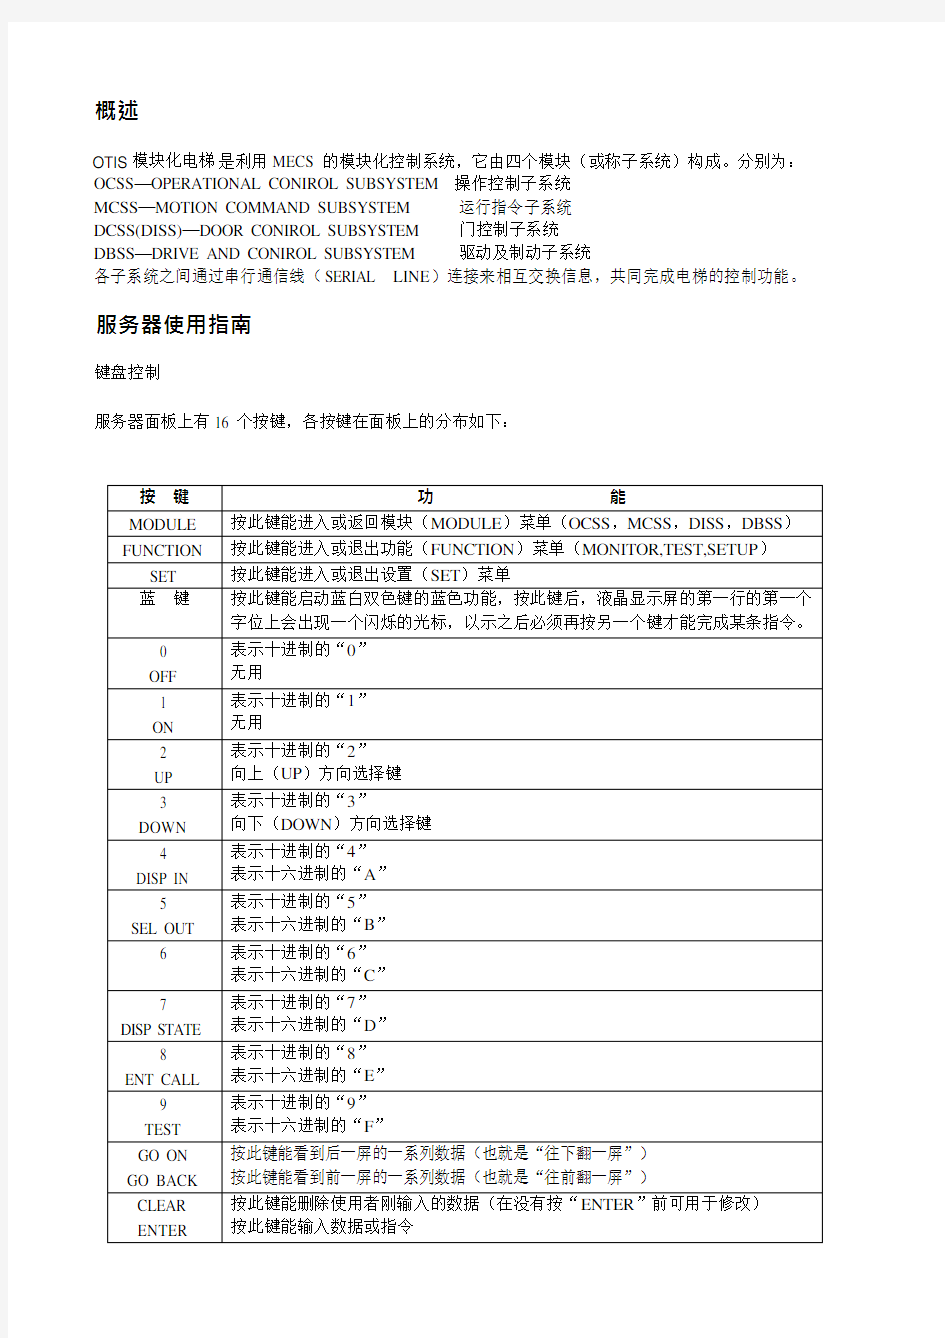 OTIS服务器中文使用手册